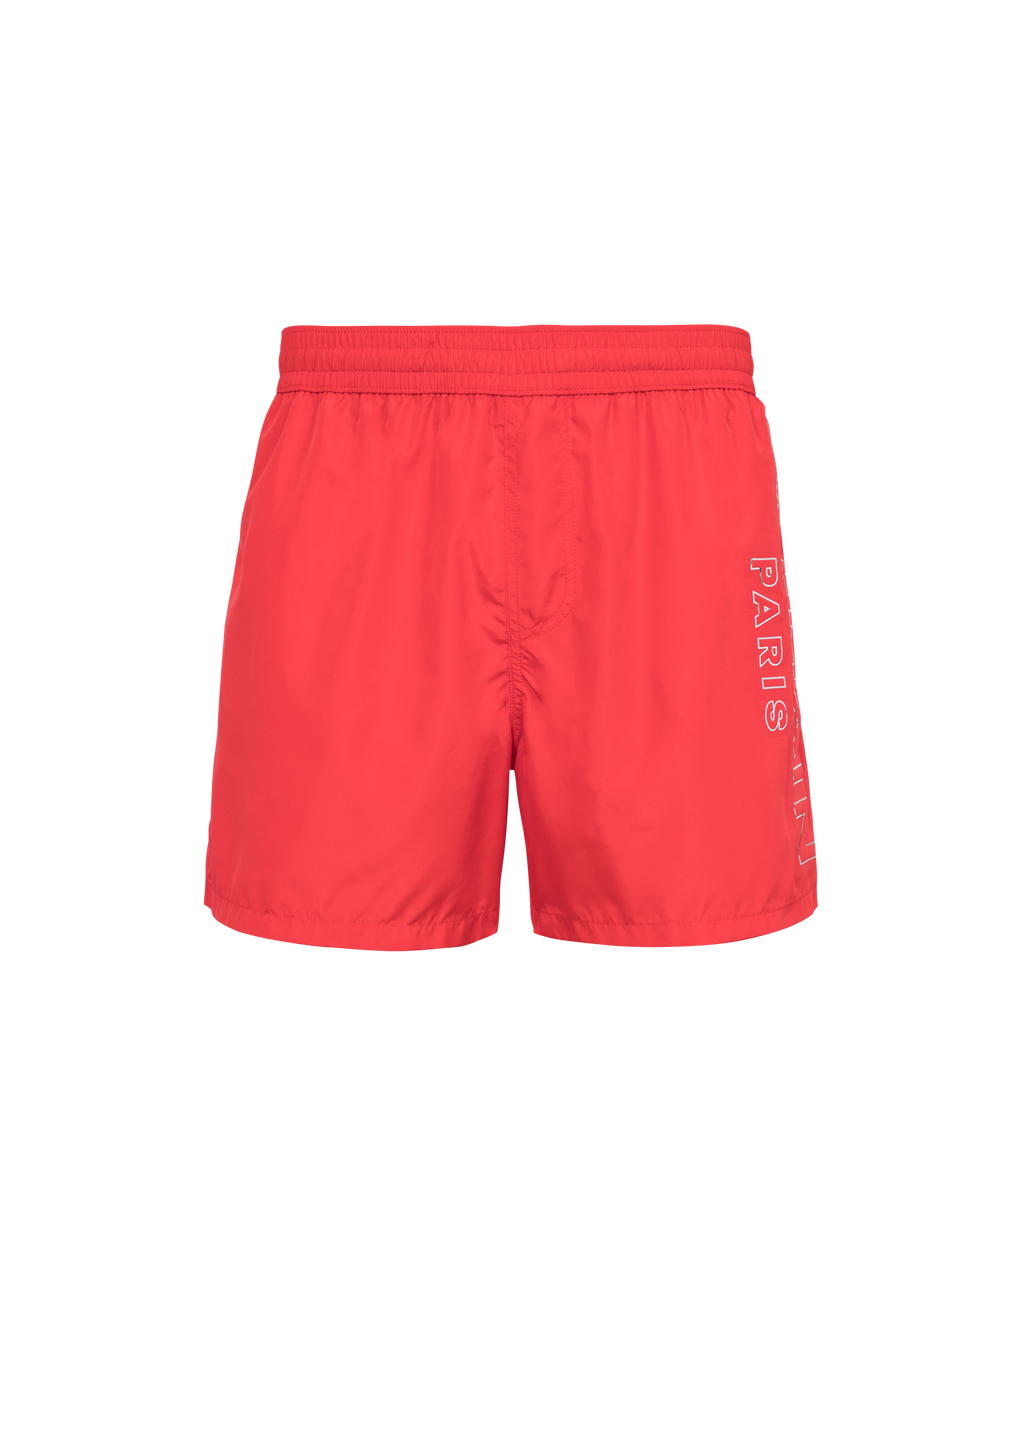 Balmain logo swim shorts, red, hi-res